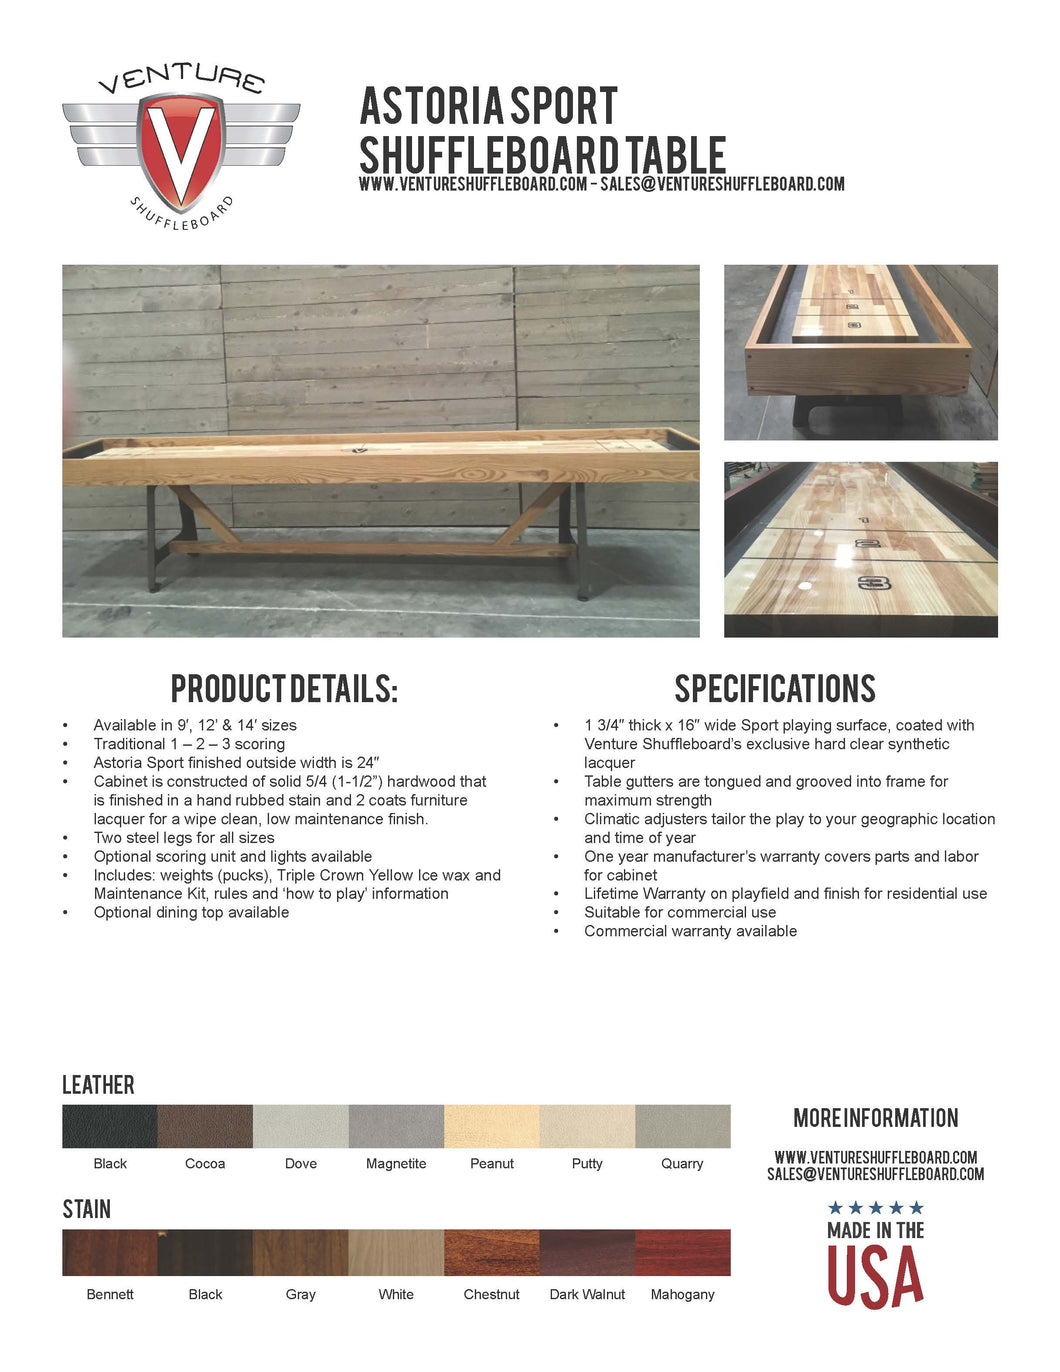 Astoria Sport Shuffleboard Table